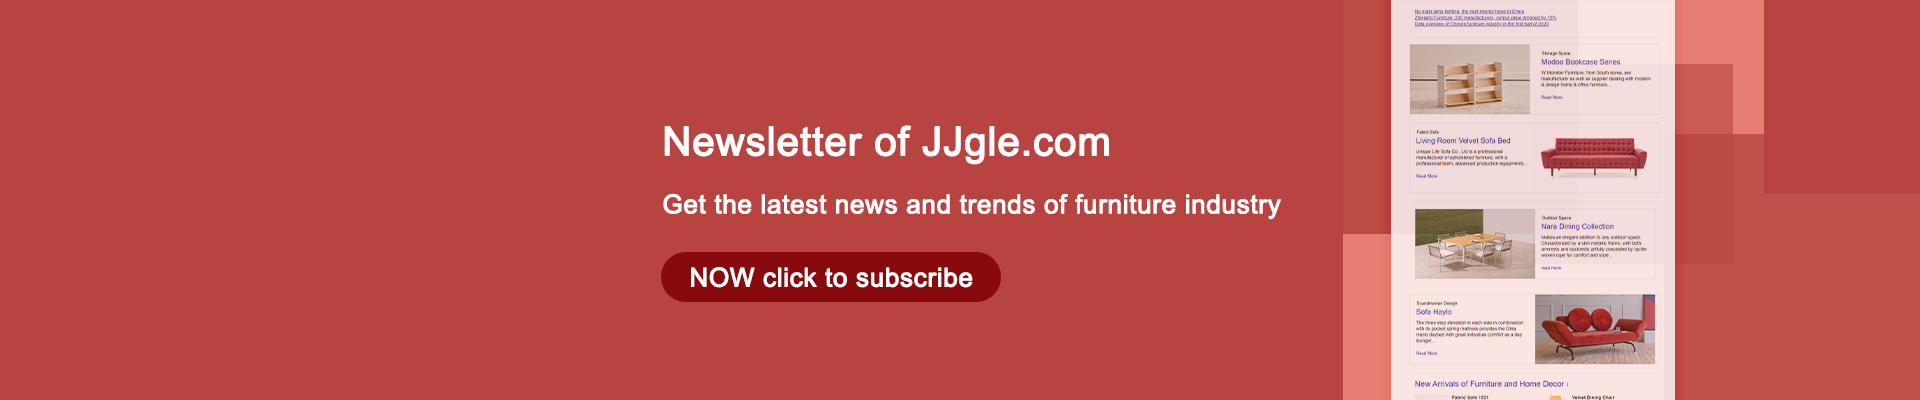 Newsletter of JJgle.com